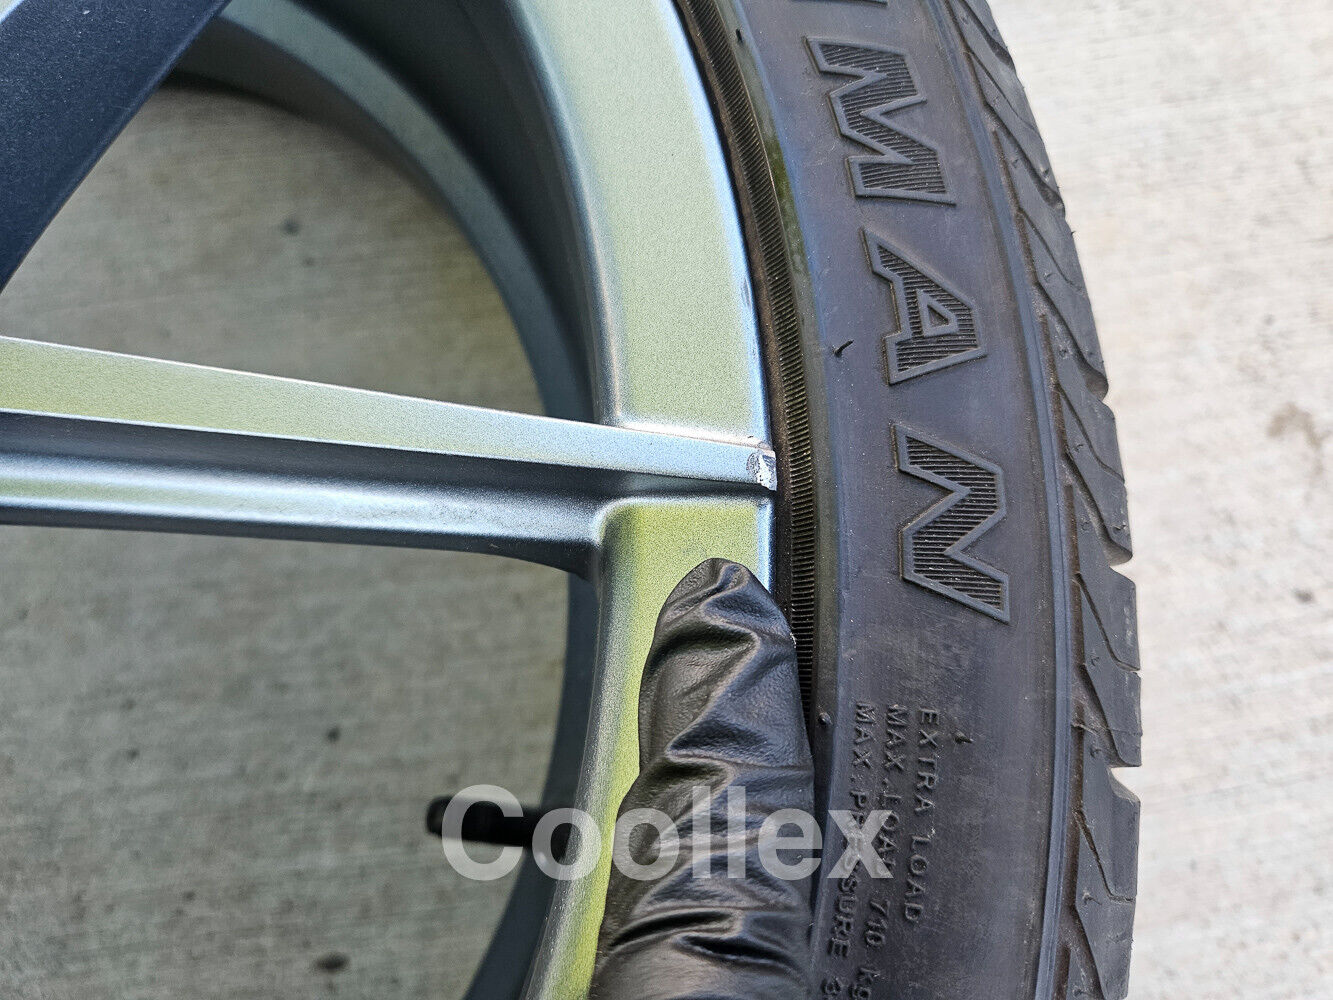 Verde x1 Wheel/Tire - V99 Axis Matte Graphite Wheel 19x8.5 255/35/19 (Is250)